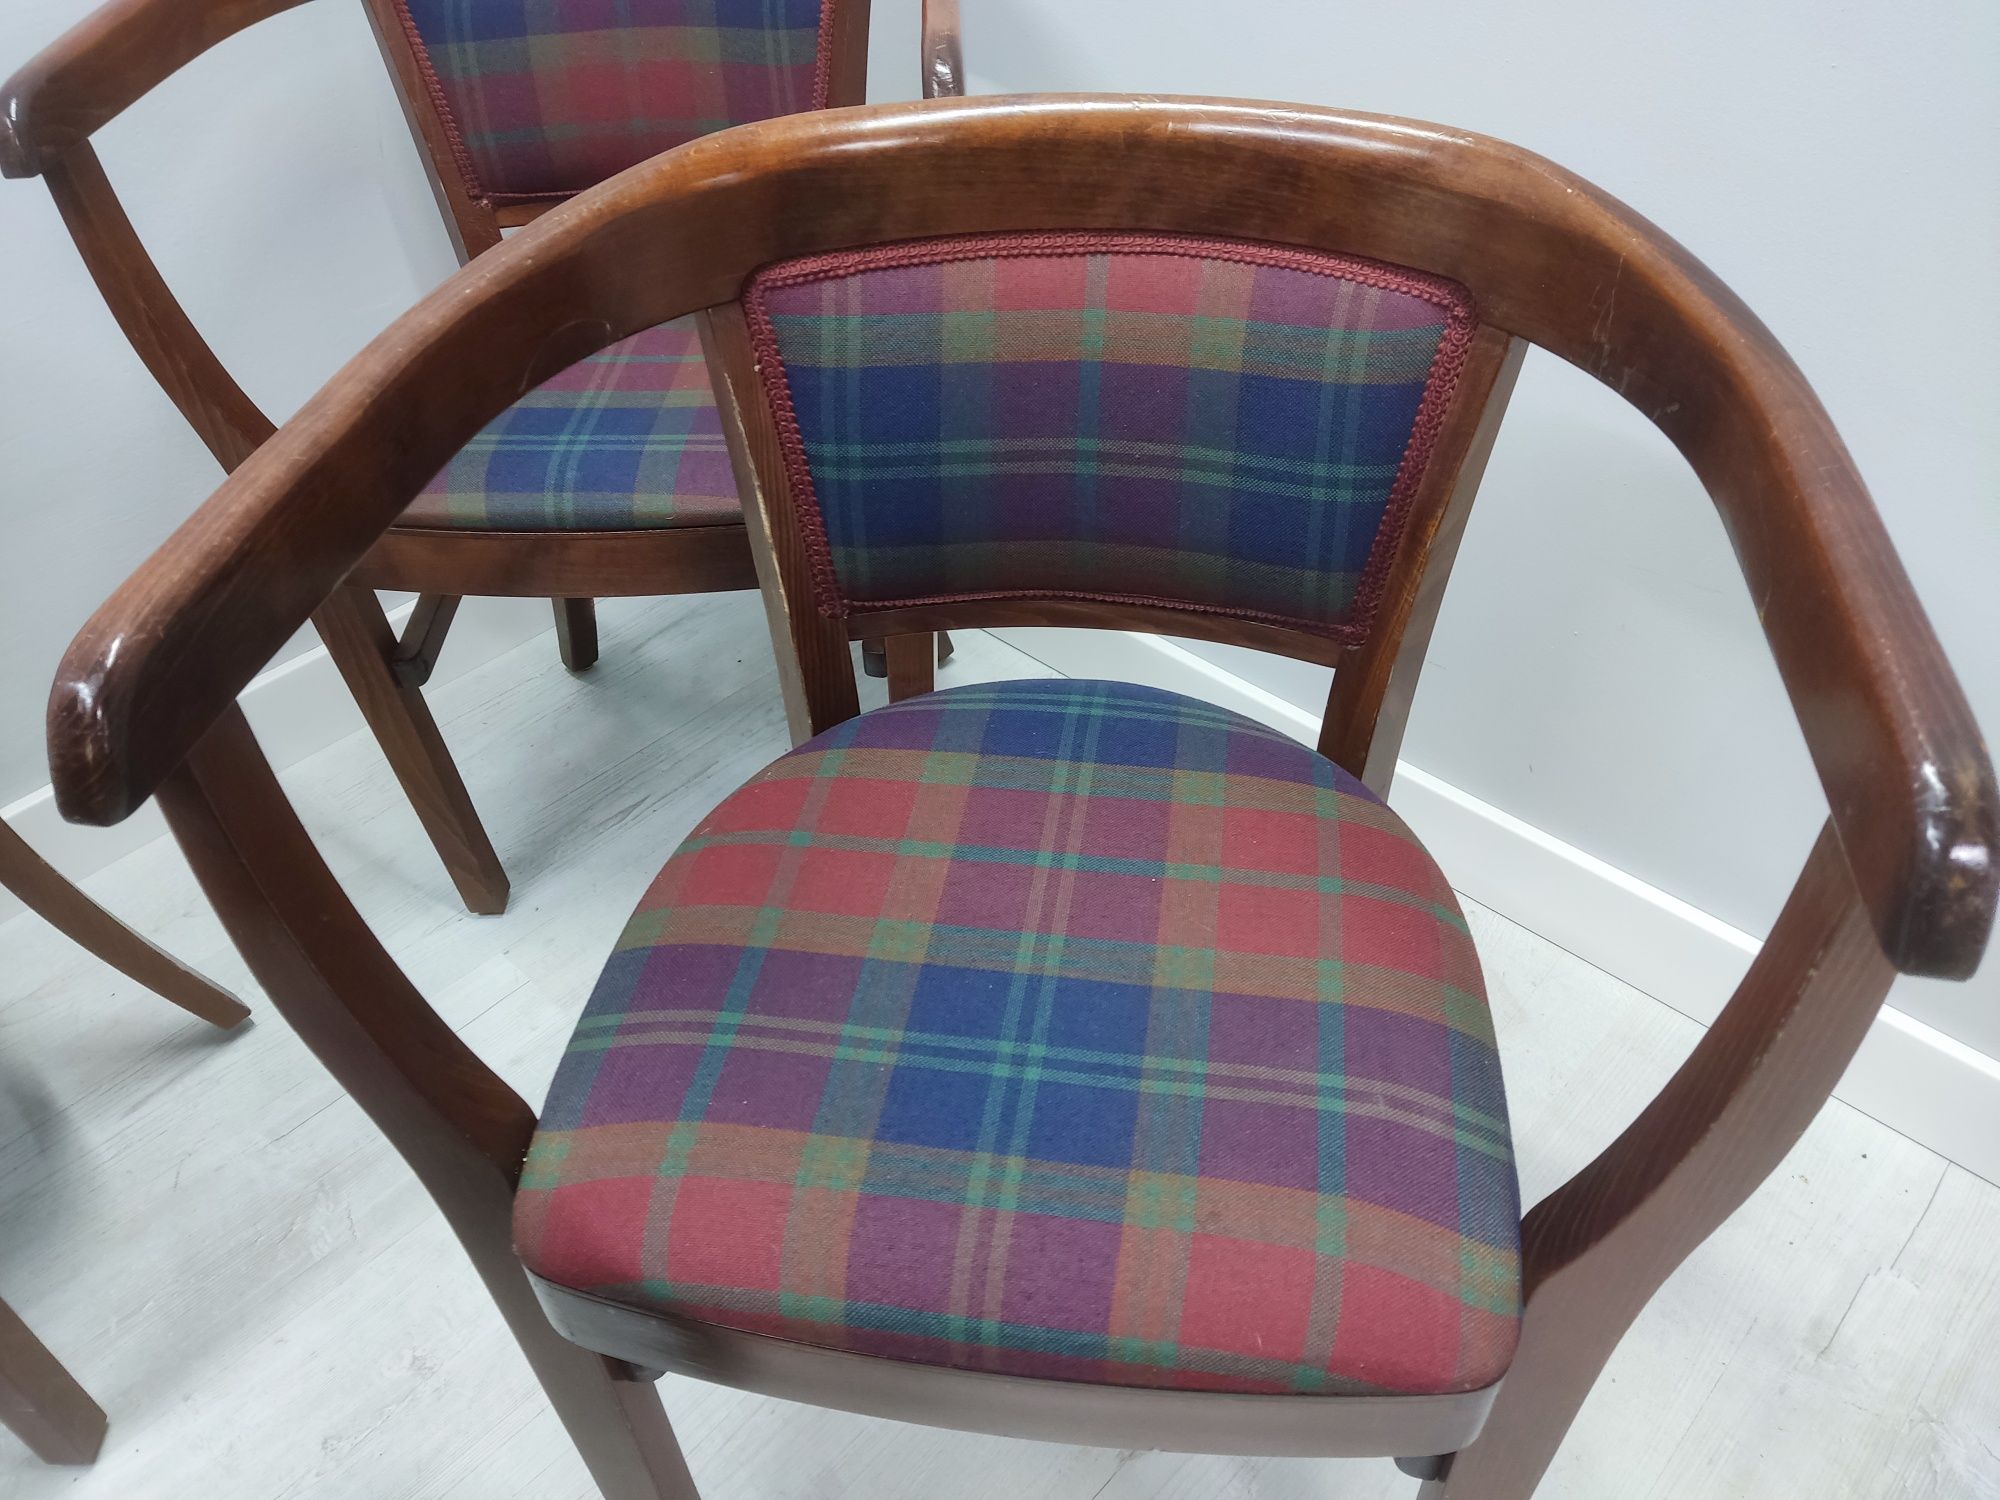 Fotel gabinetowy krzesła Thonet Fameg Vintage dostępne 20 szt